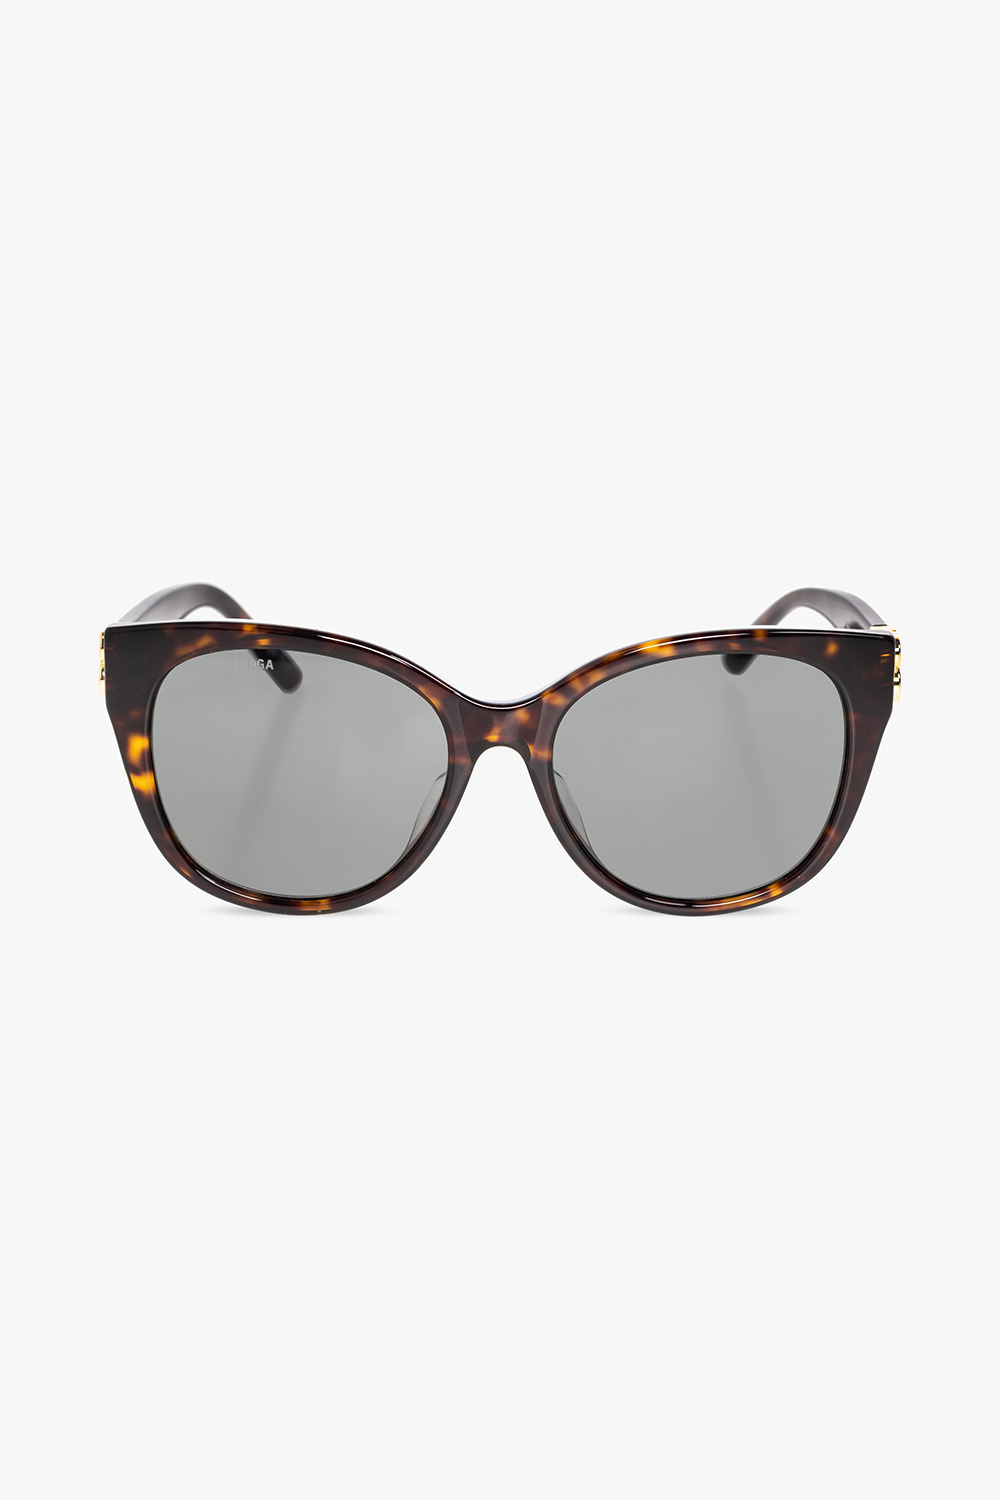 Balenciaga ‘Dynasty Cat’ sunglasses